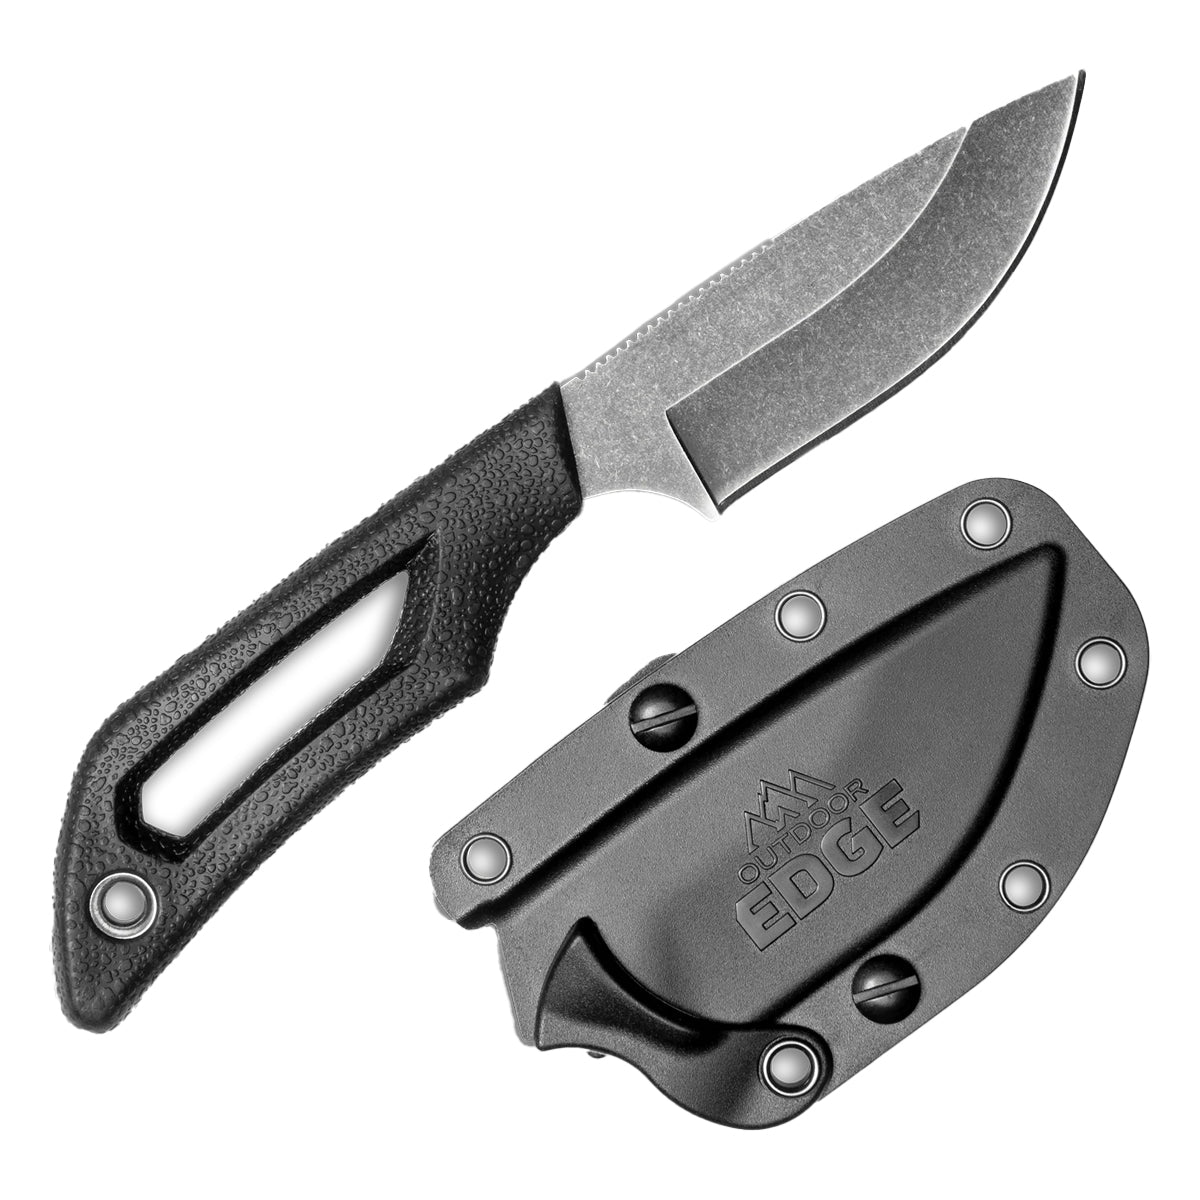 Shop for Outdoor Edge Pivot Knife | GOHUNT